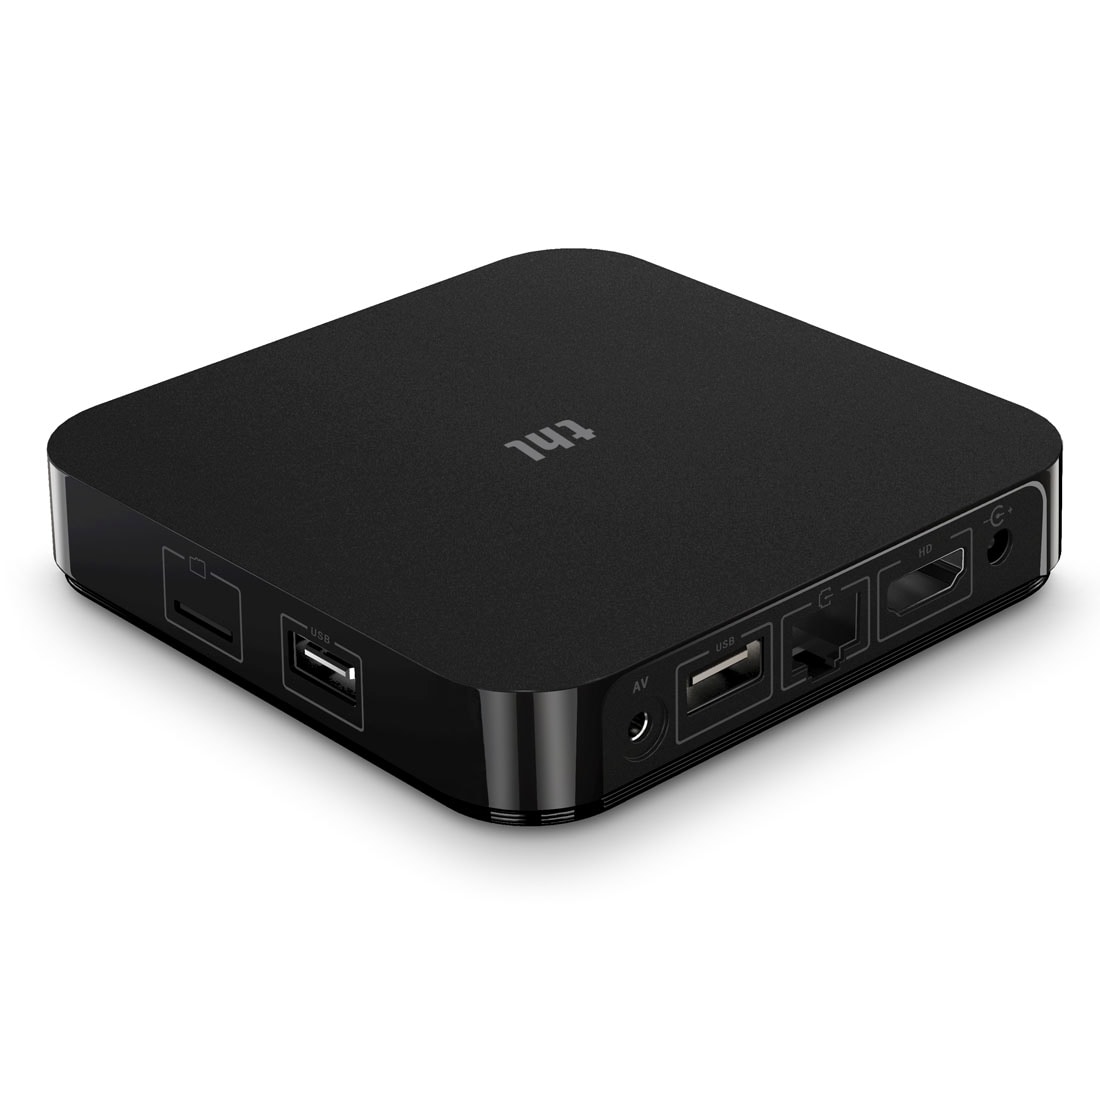 Tv-BOX 1 Ultra HD 4K Smart TV Android 7.1 - WiFi, HDMI